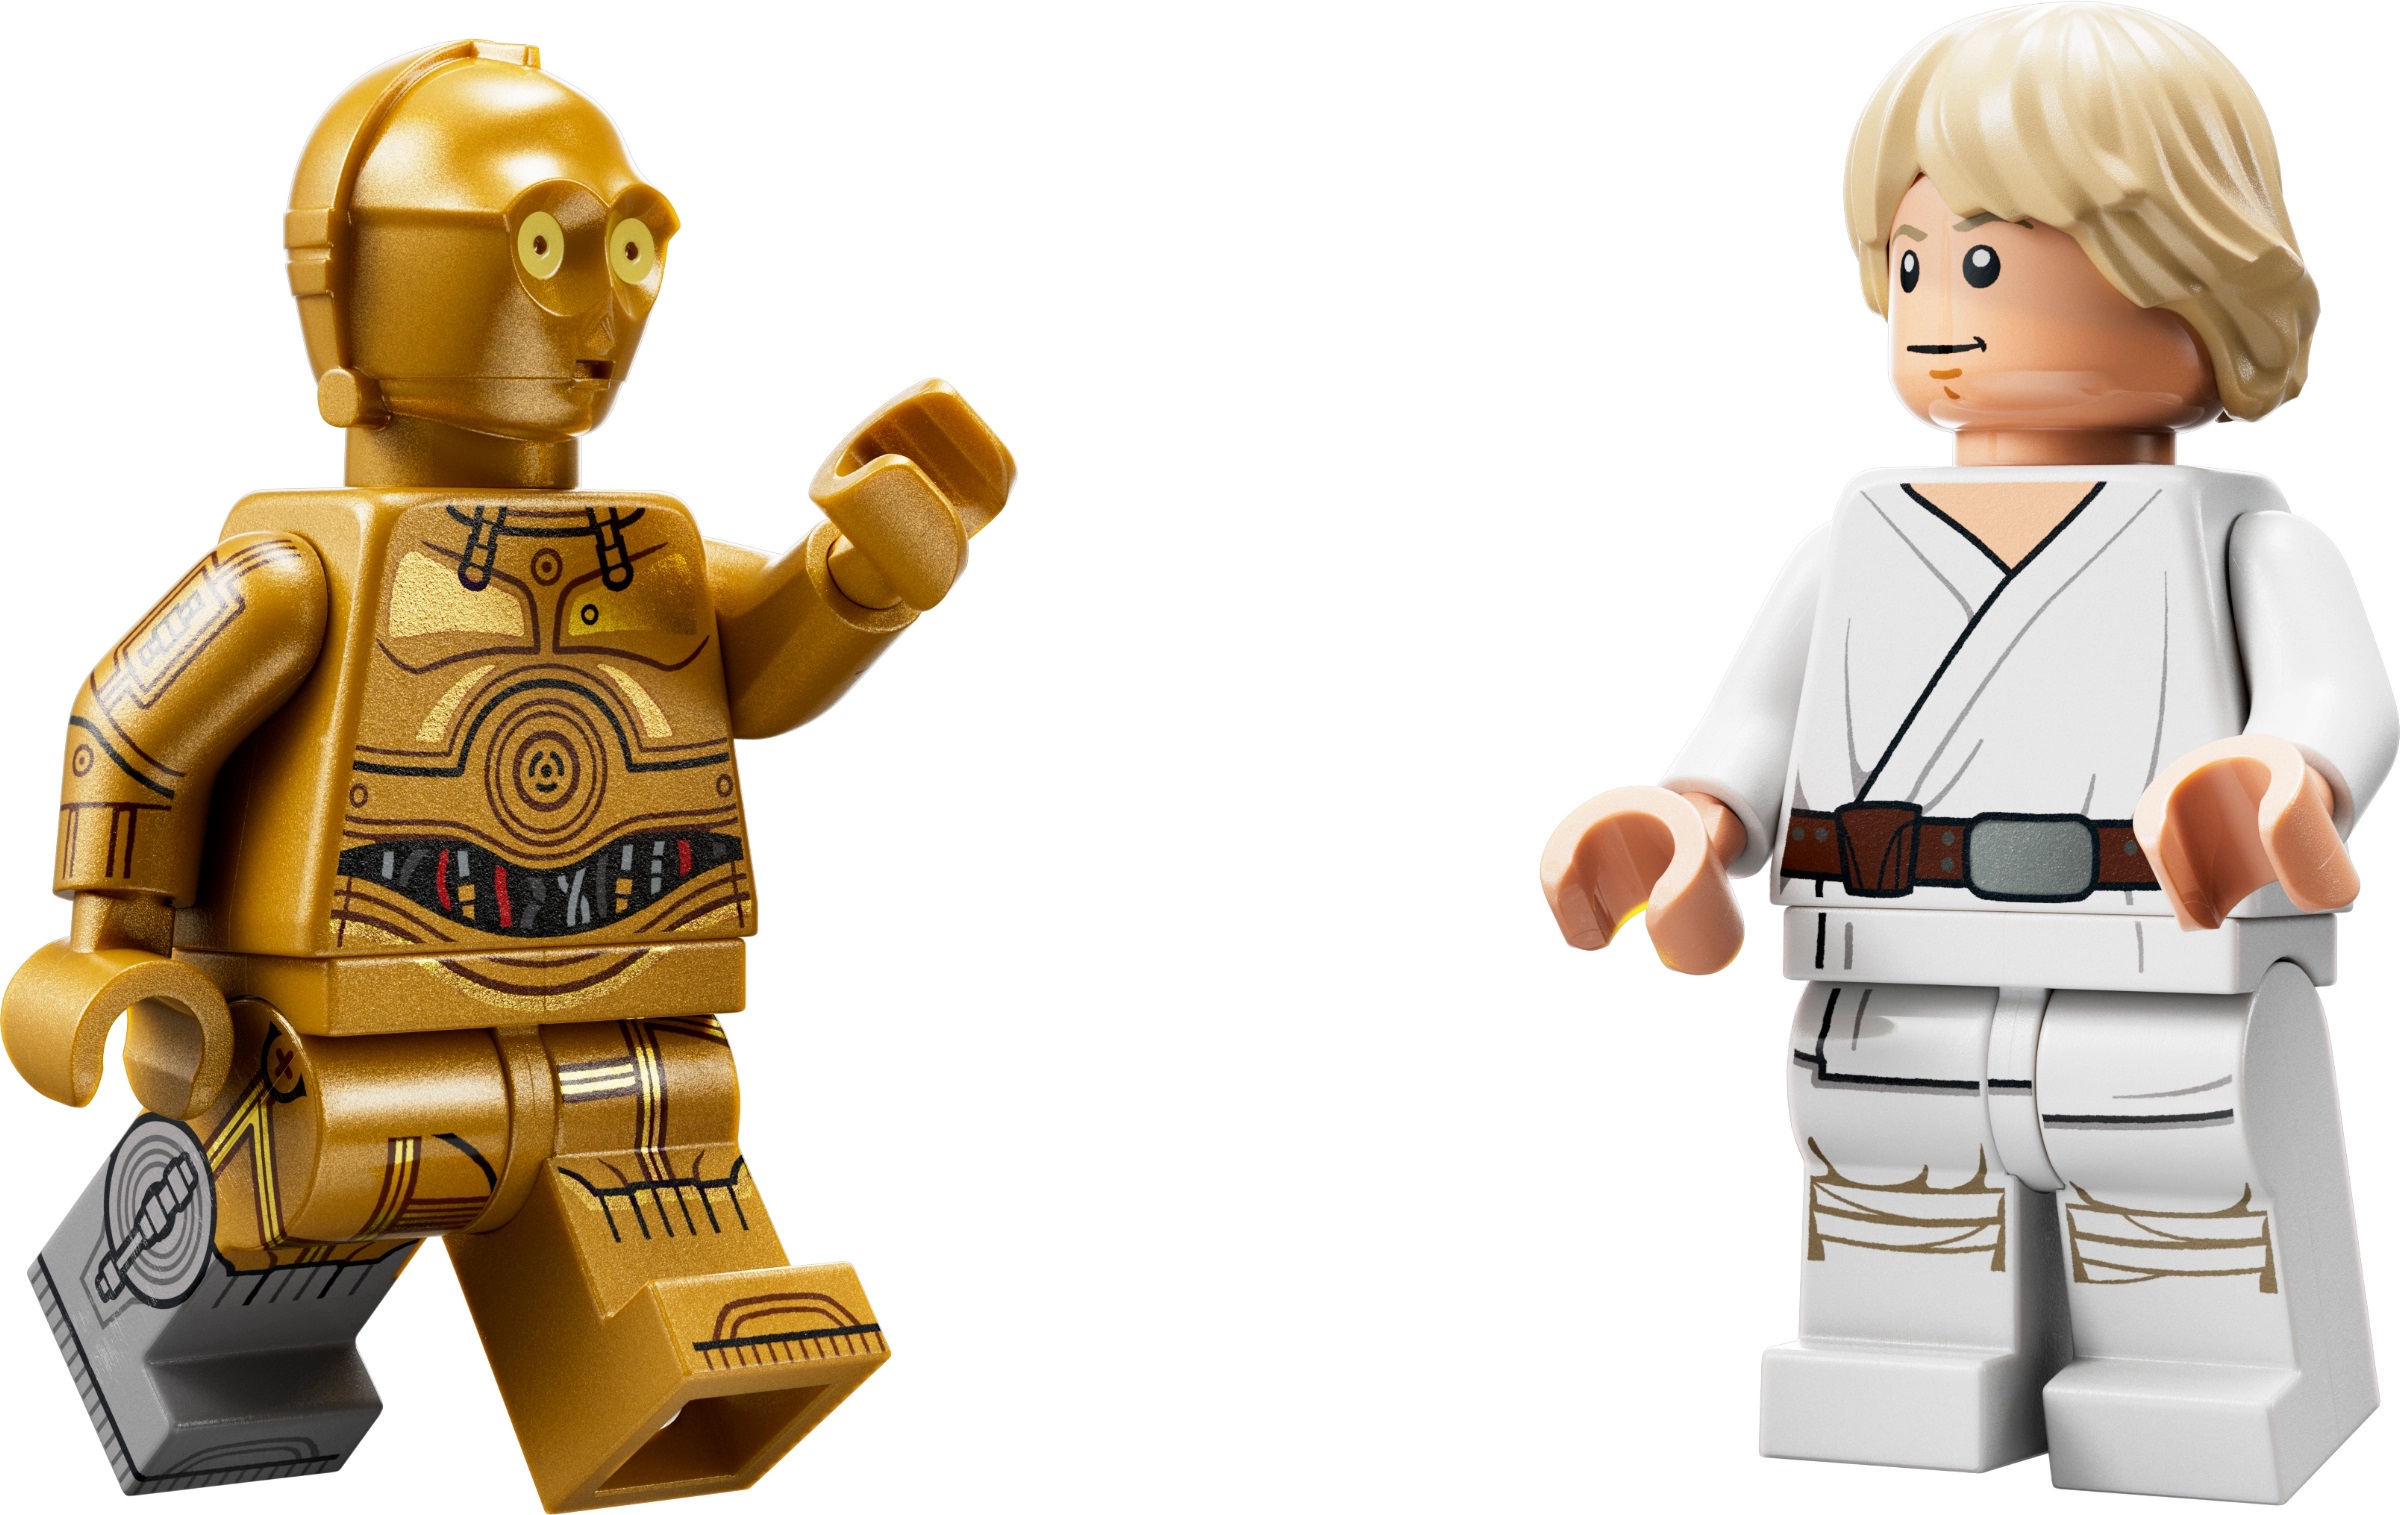 Il set LEGO Star Wars 75341 UCS - Landspeeder di Luke Skywalker